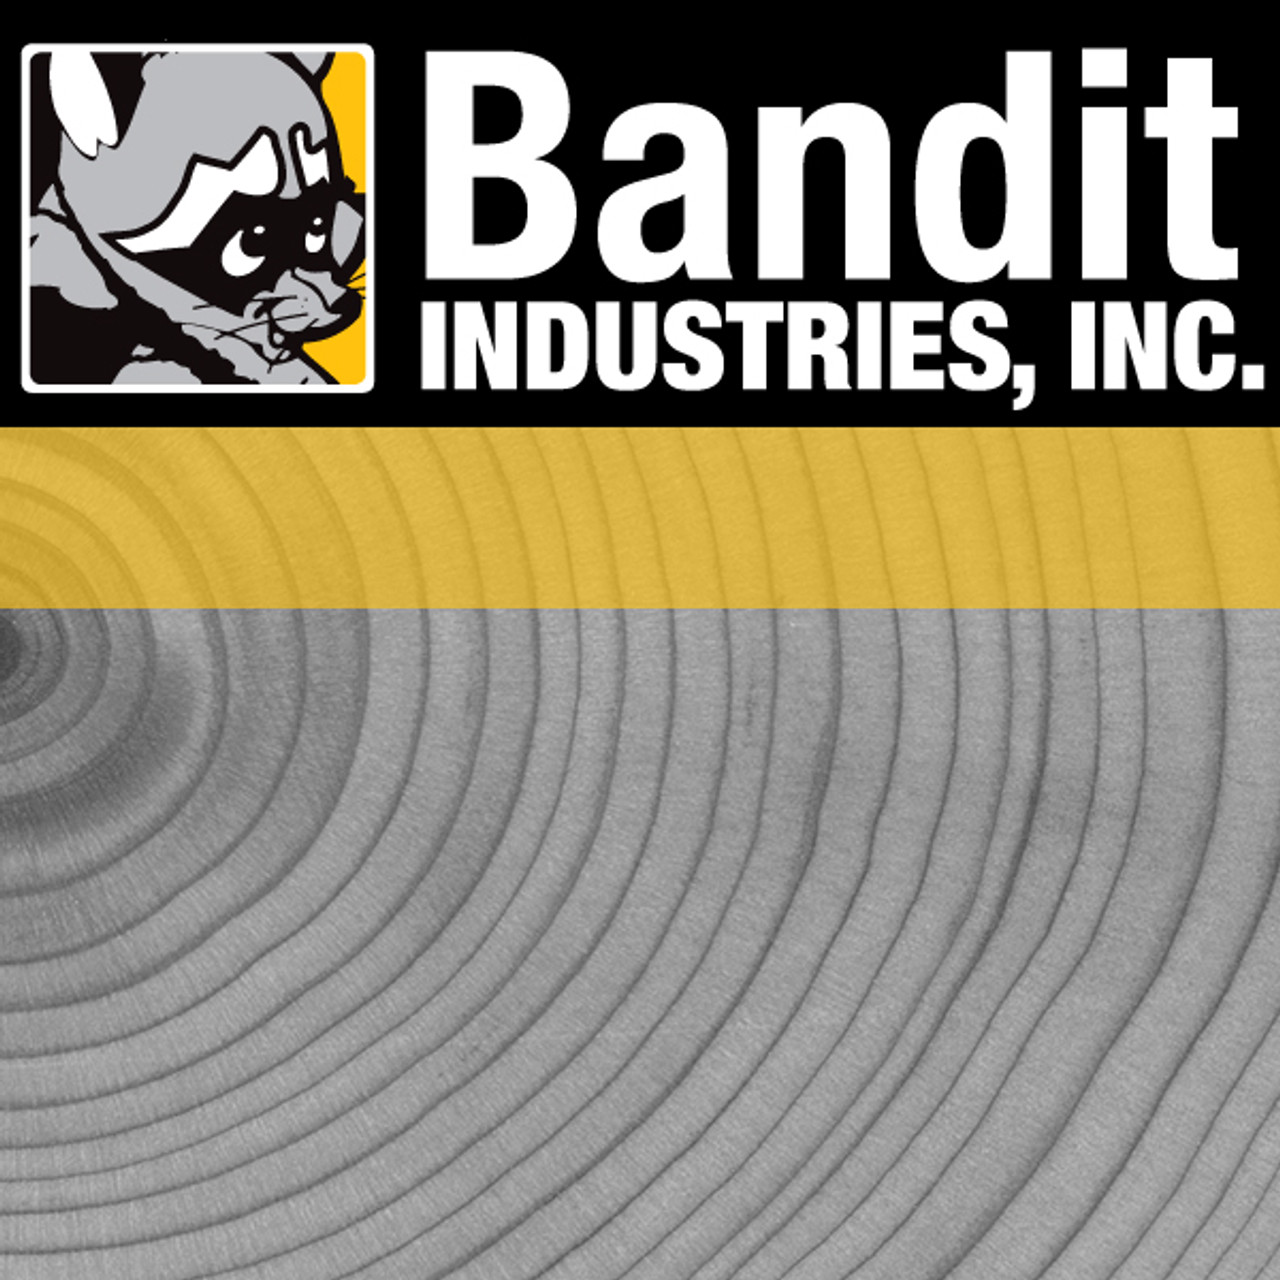 203-1000-24: BANDIT 29"" WHEEL LOCK